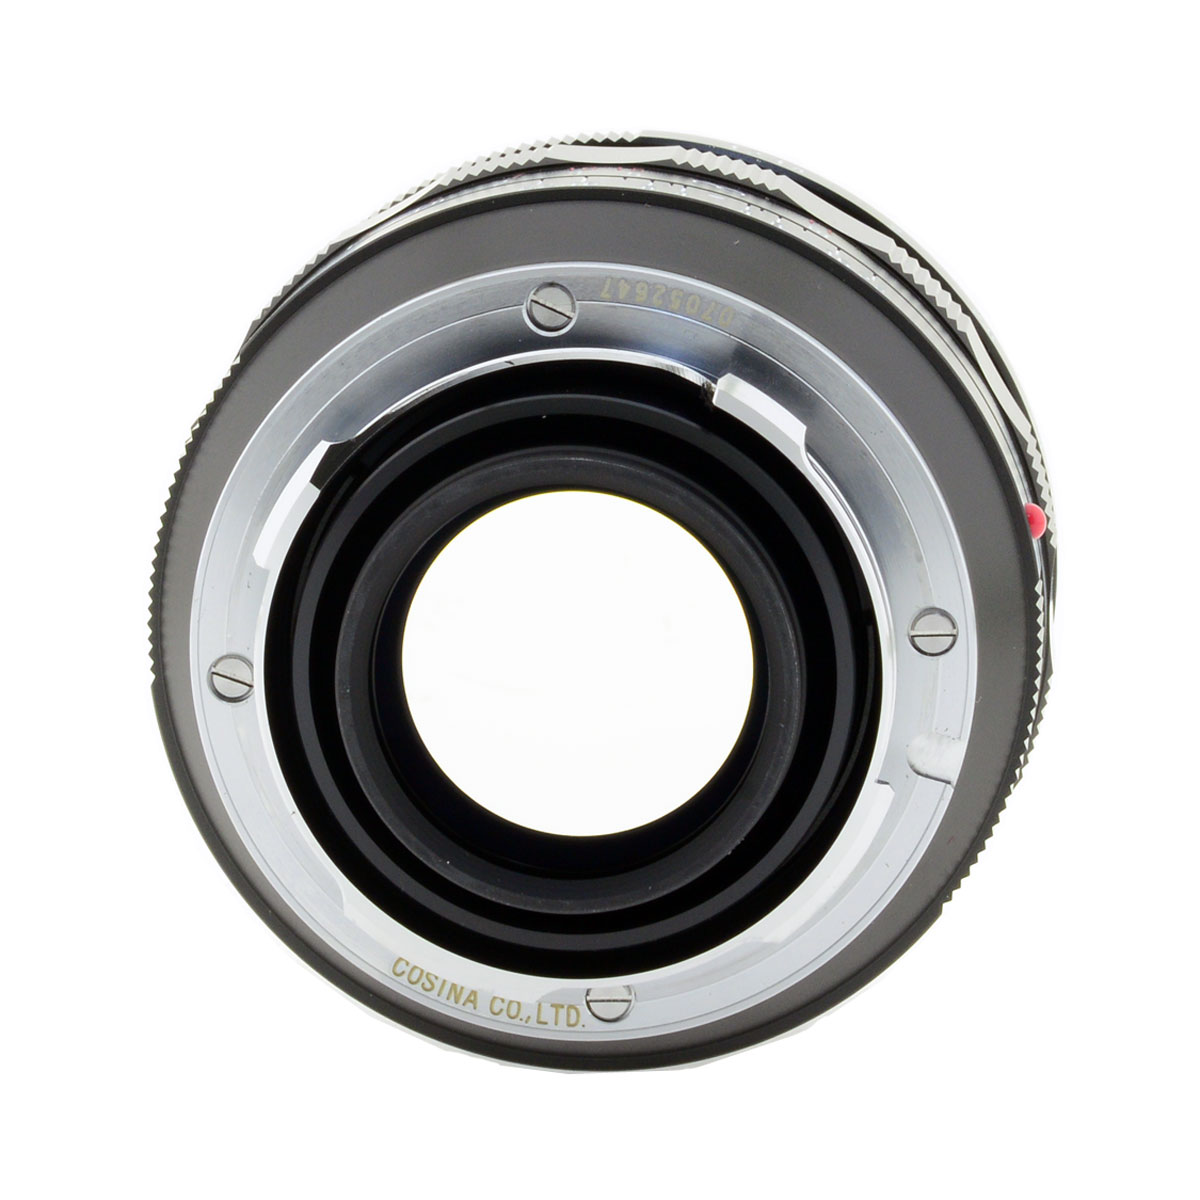 Voigtlaender Nokton 40mm f/1.2 Aspherical Leica-M